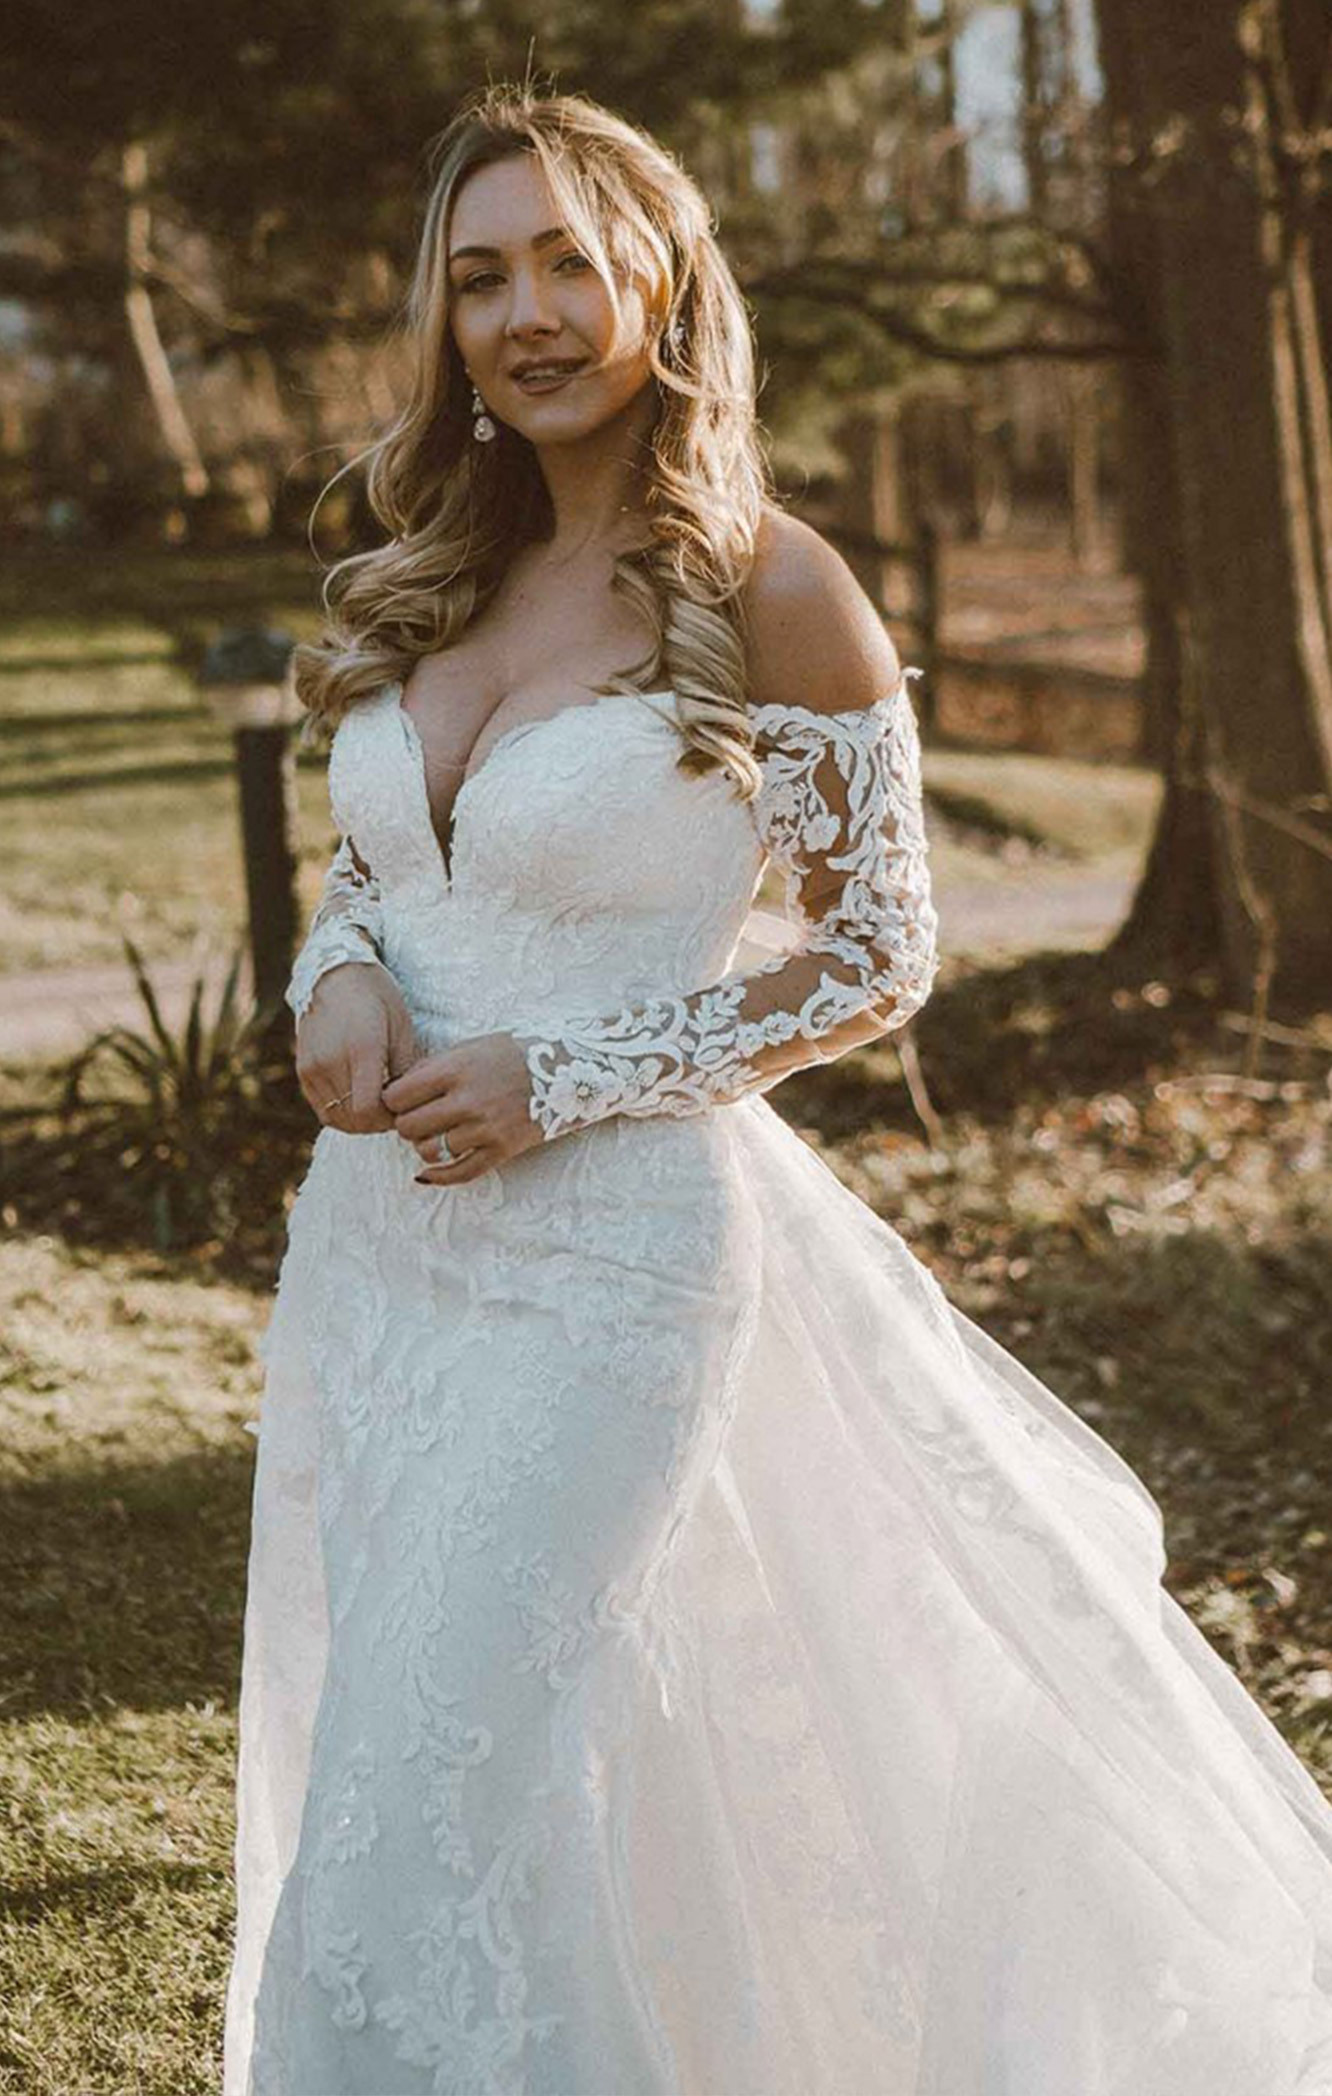 Model in white Martina Liana Wedding dress